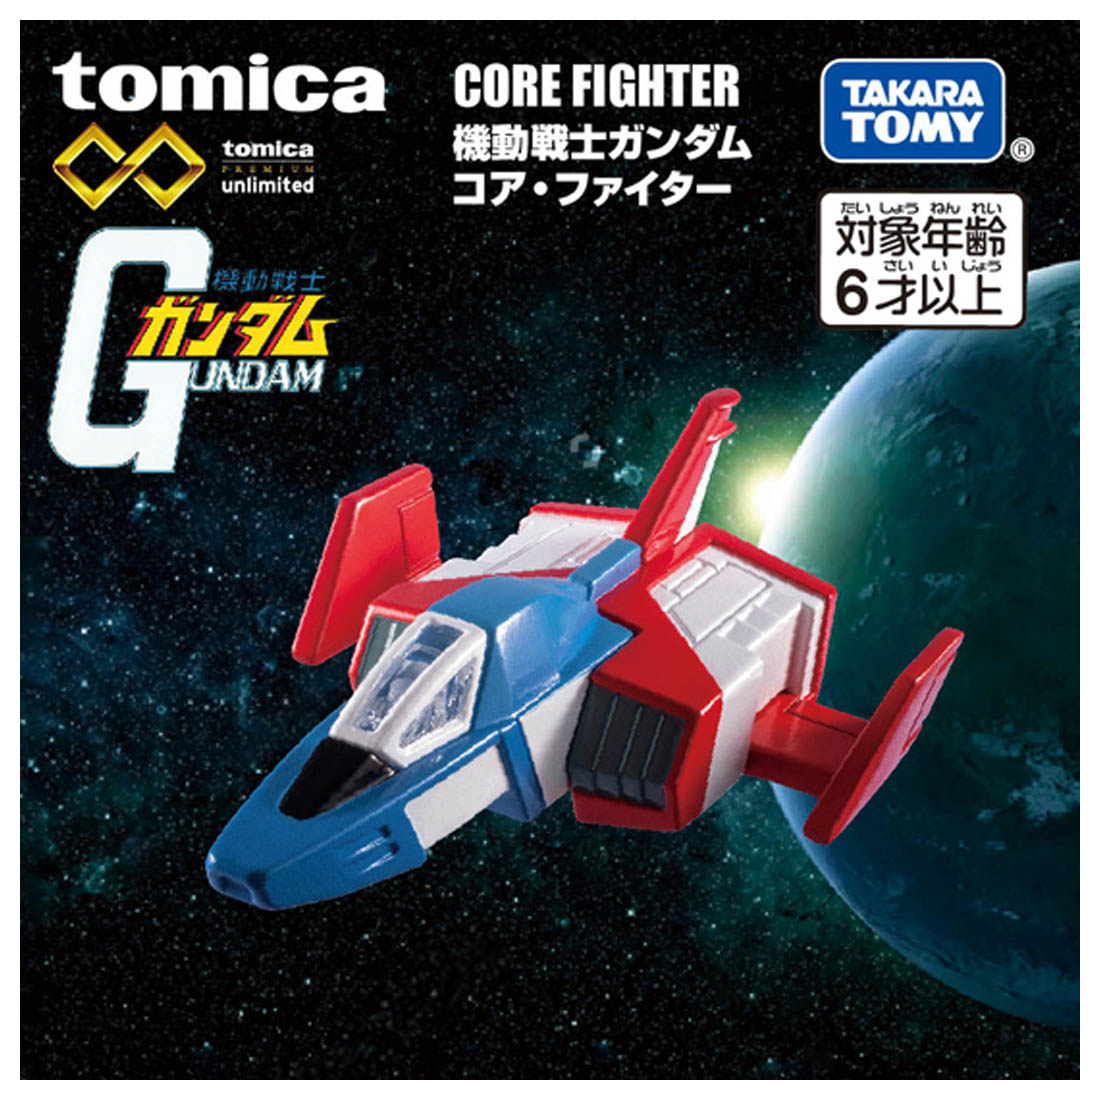 《TAKARA TOMY》TOMICA PREMIUM unlimited 無極限 鋼彈-核心戰機 東喬精品百貨